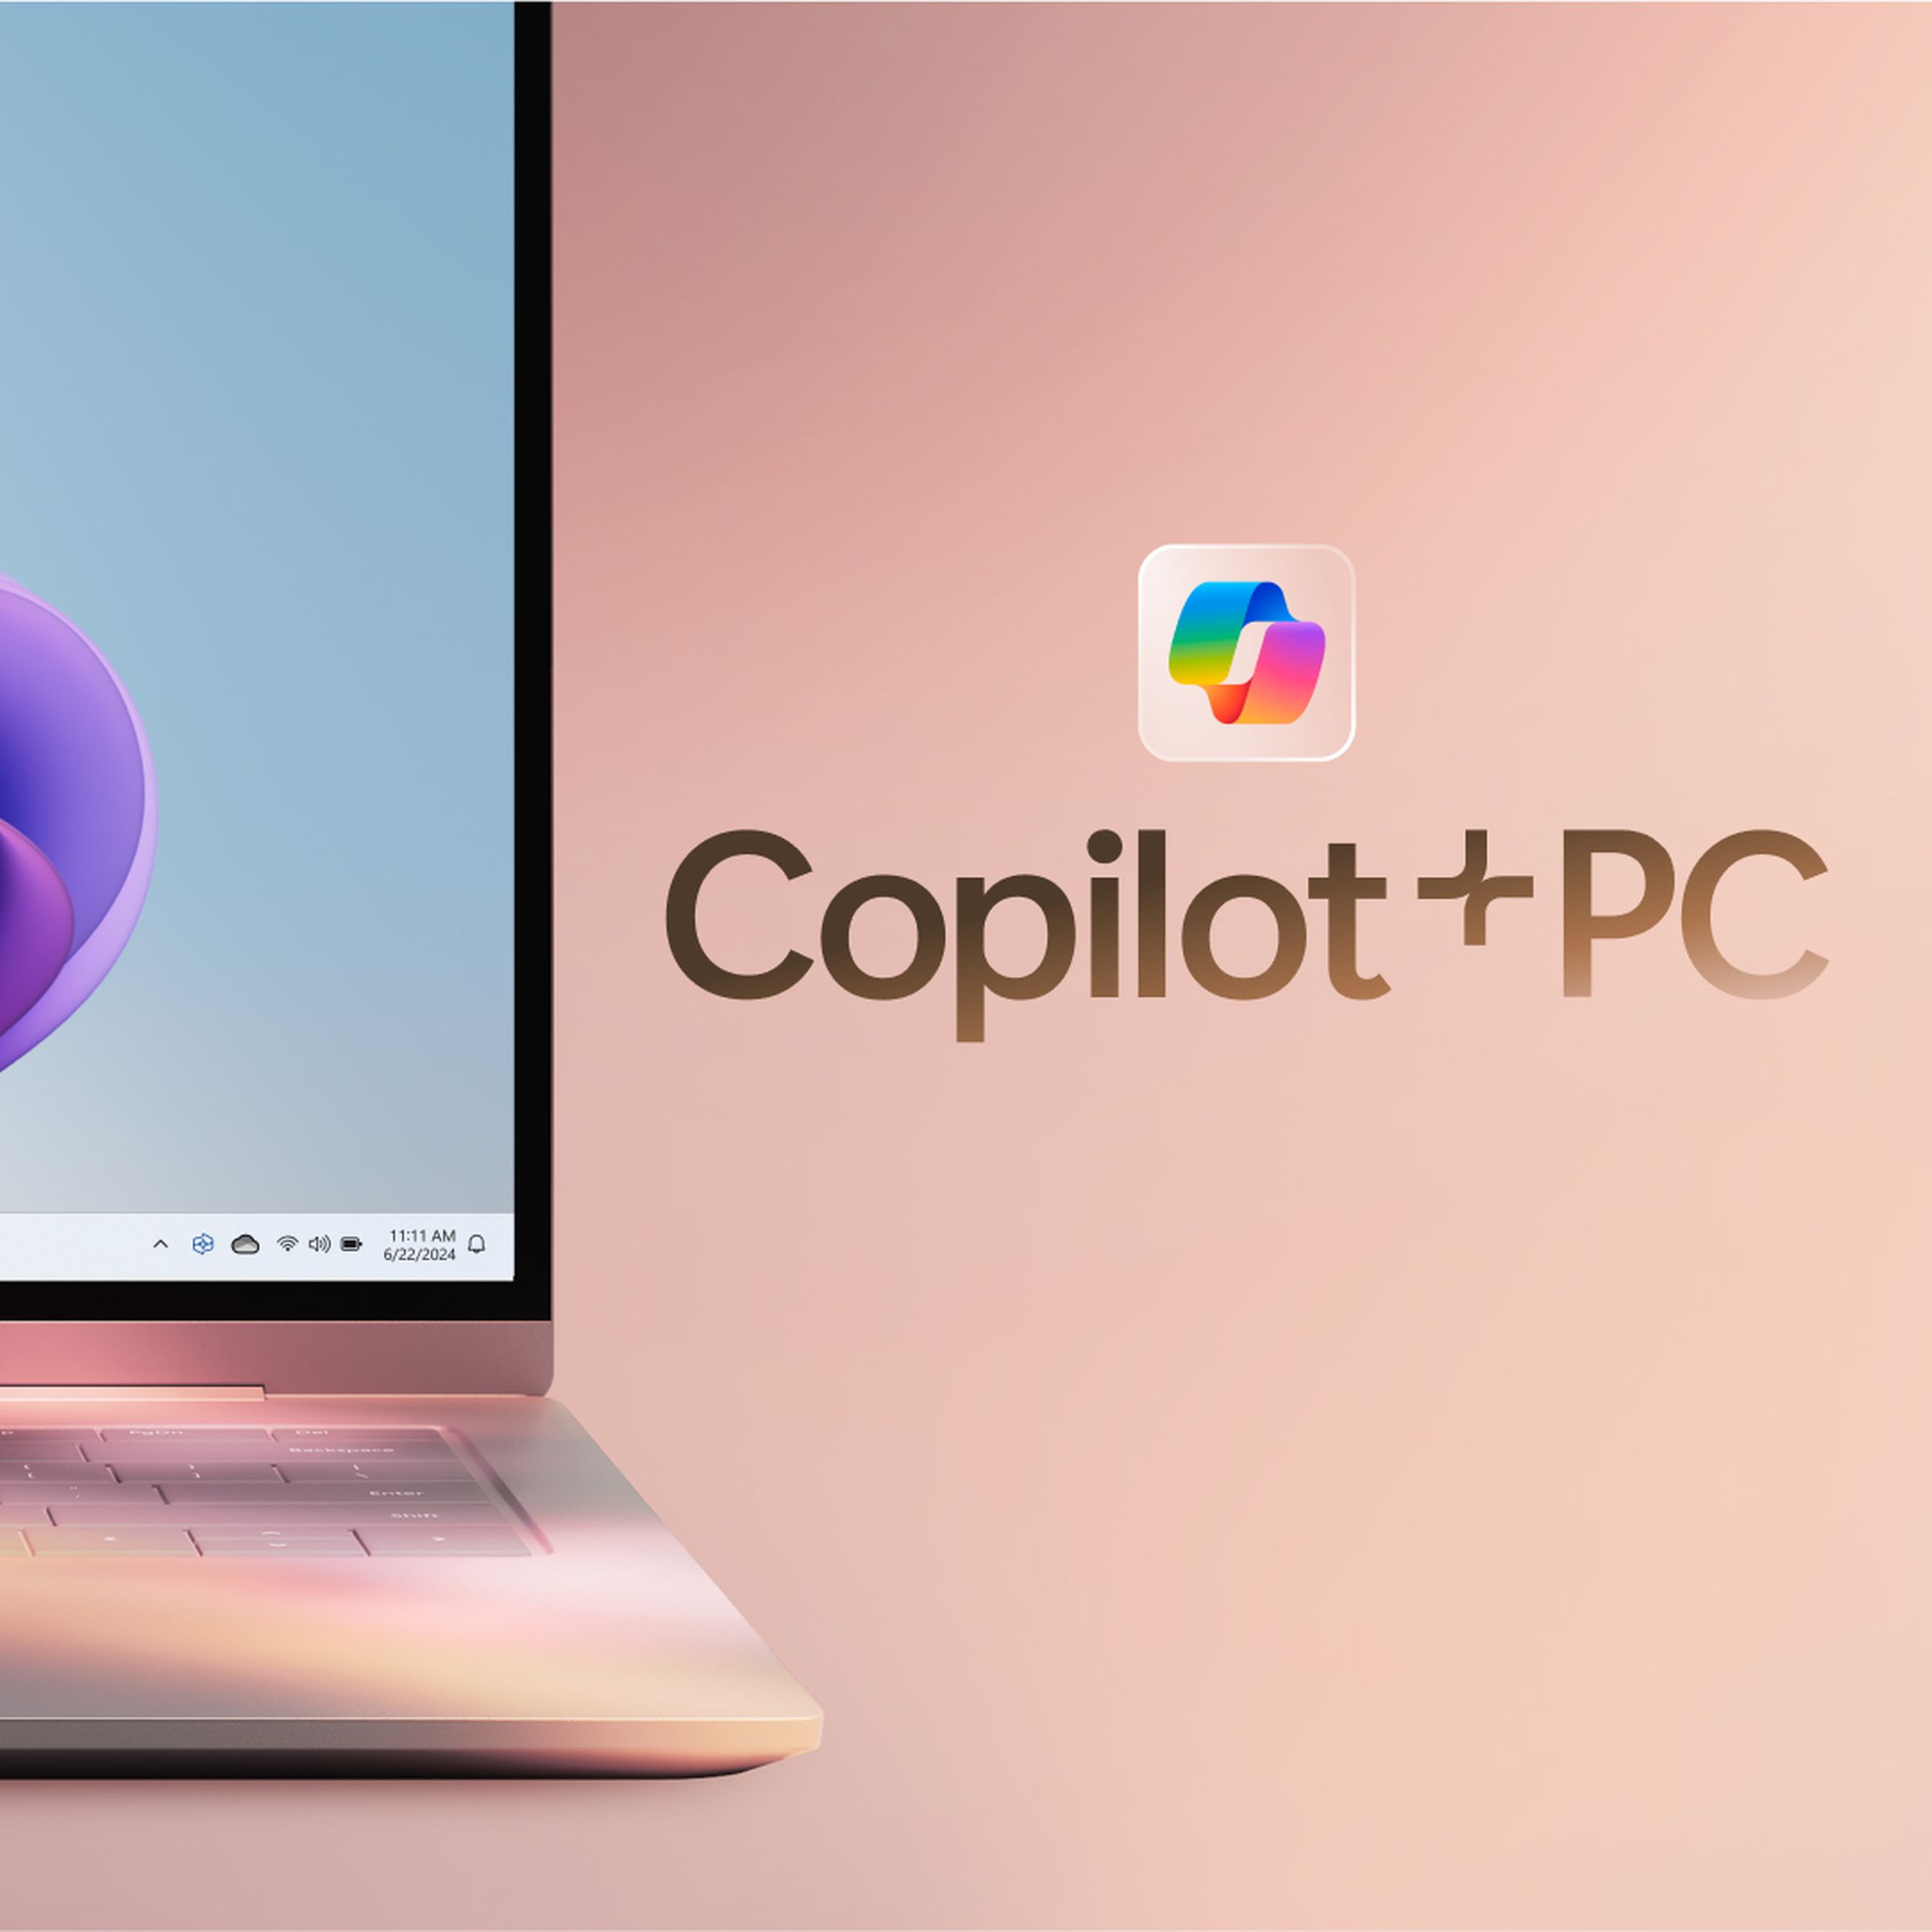 Illustration of Copilot Plus PCs